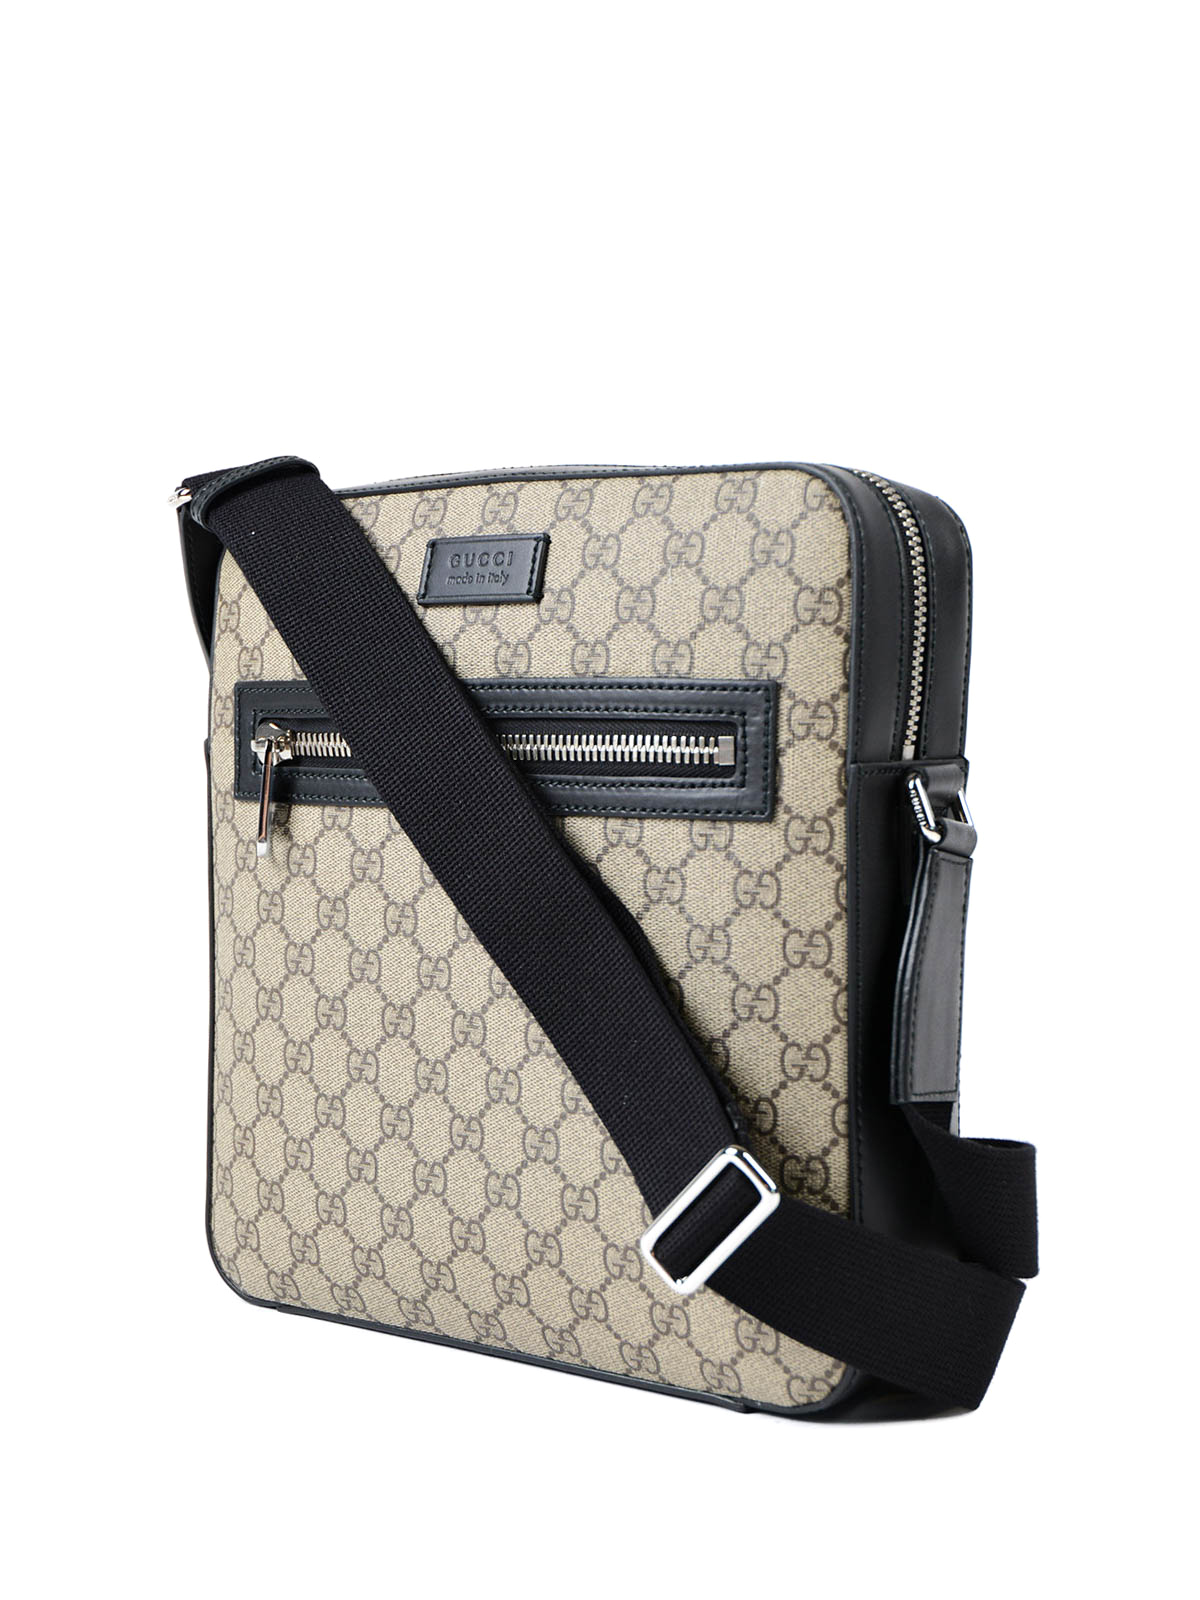 Gucci - GG Supreme canvas messenger bag 